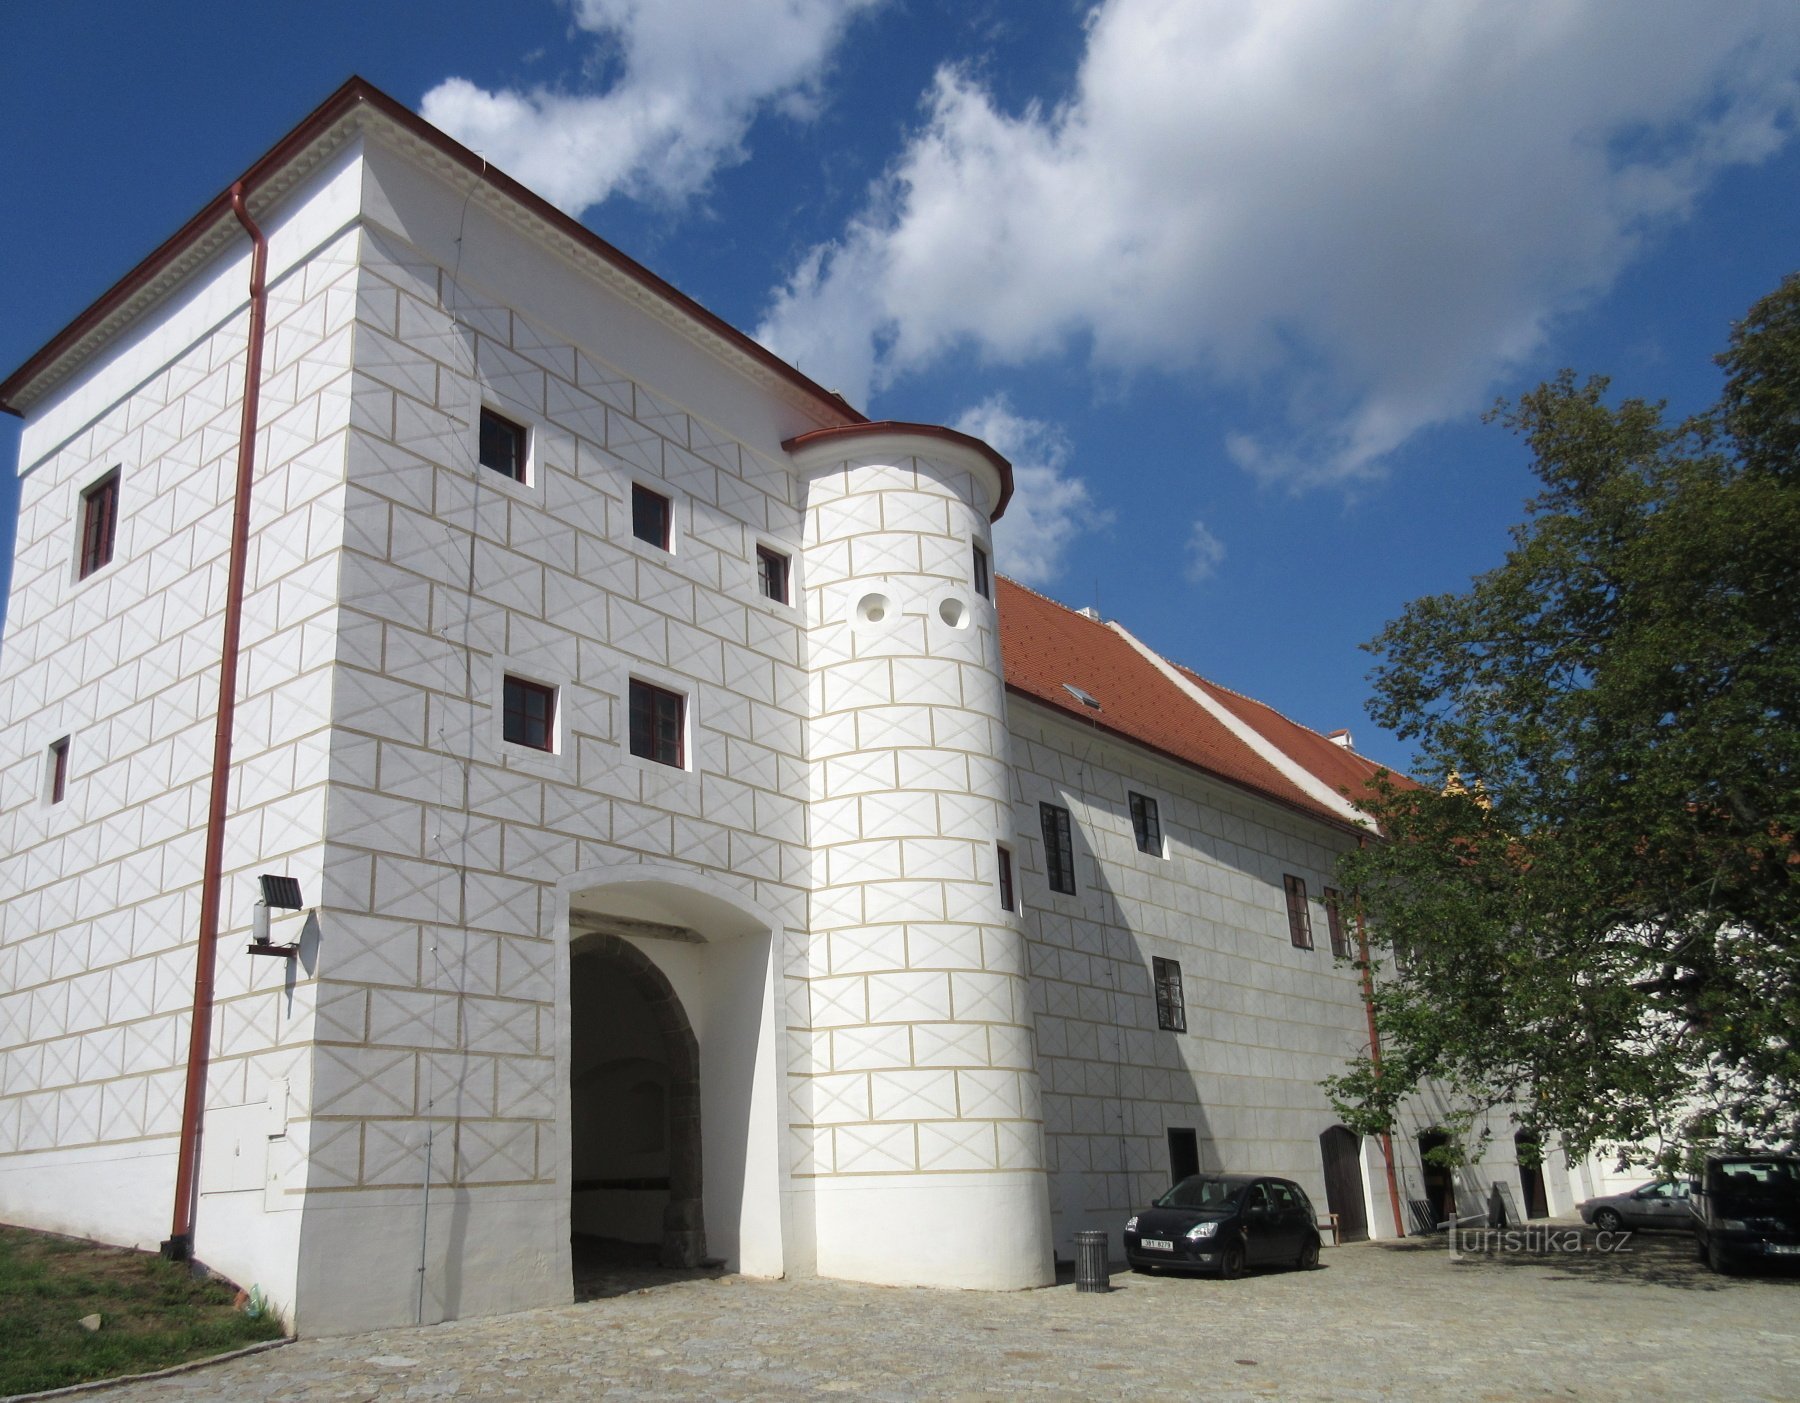 Třebíč - château, ancien monastère bénédictin, aujourd'hui musée